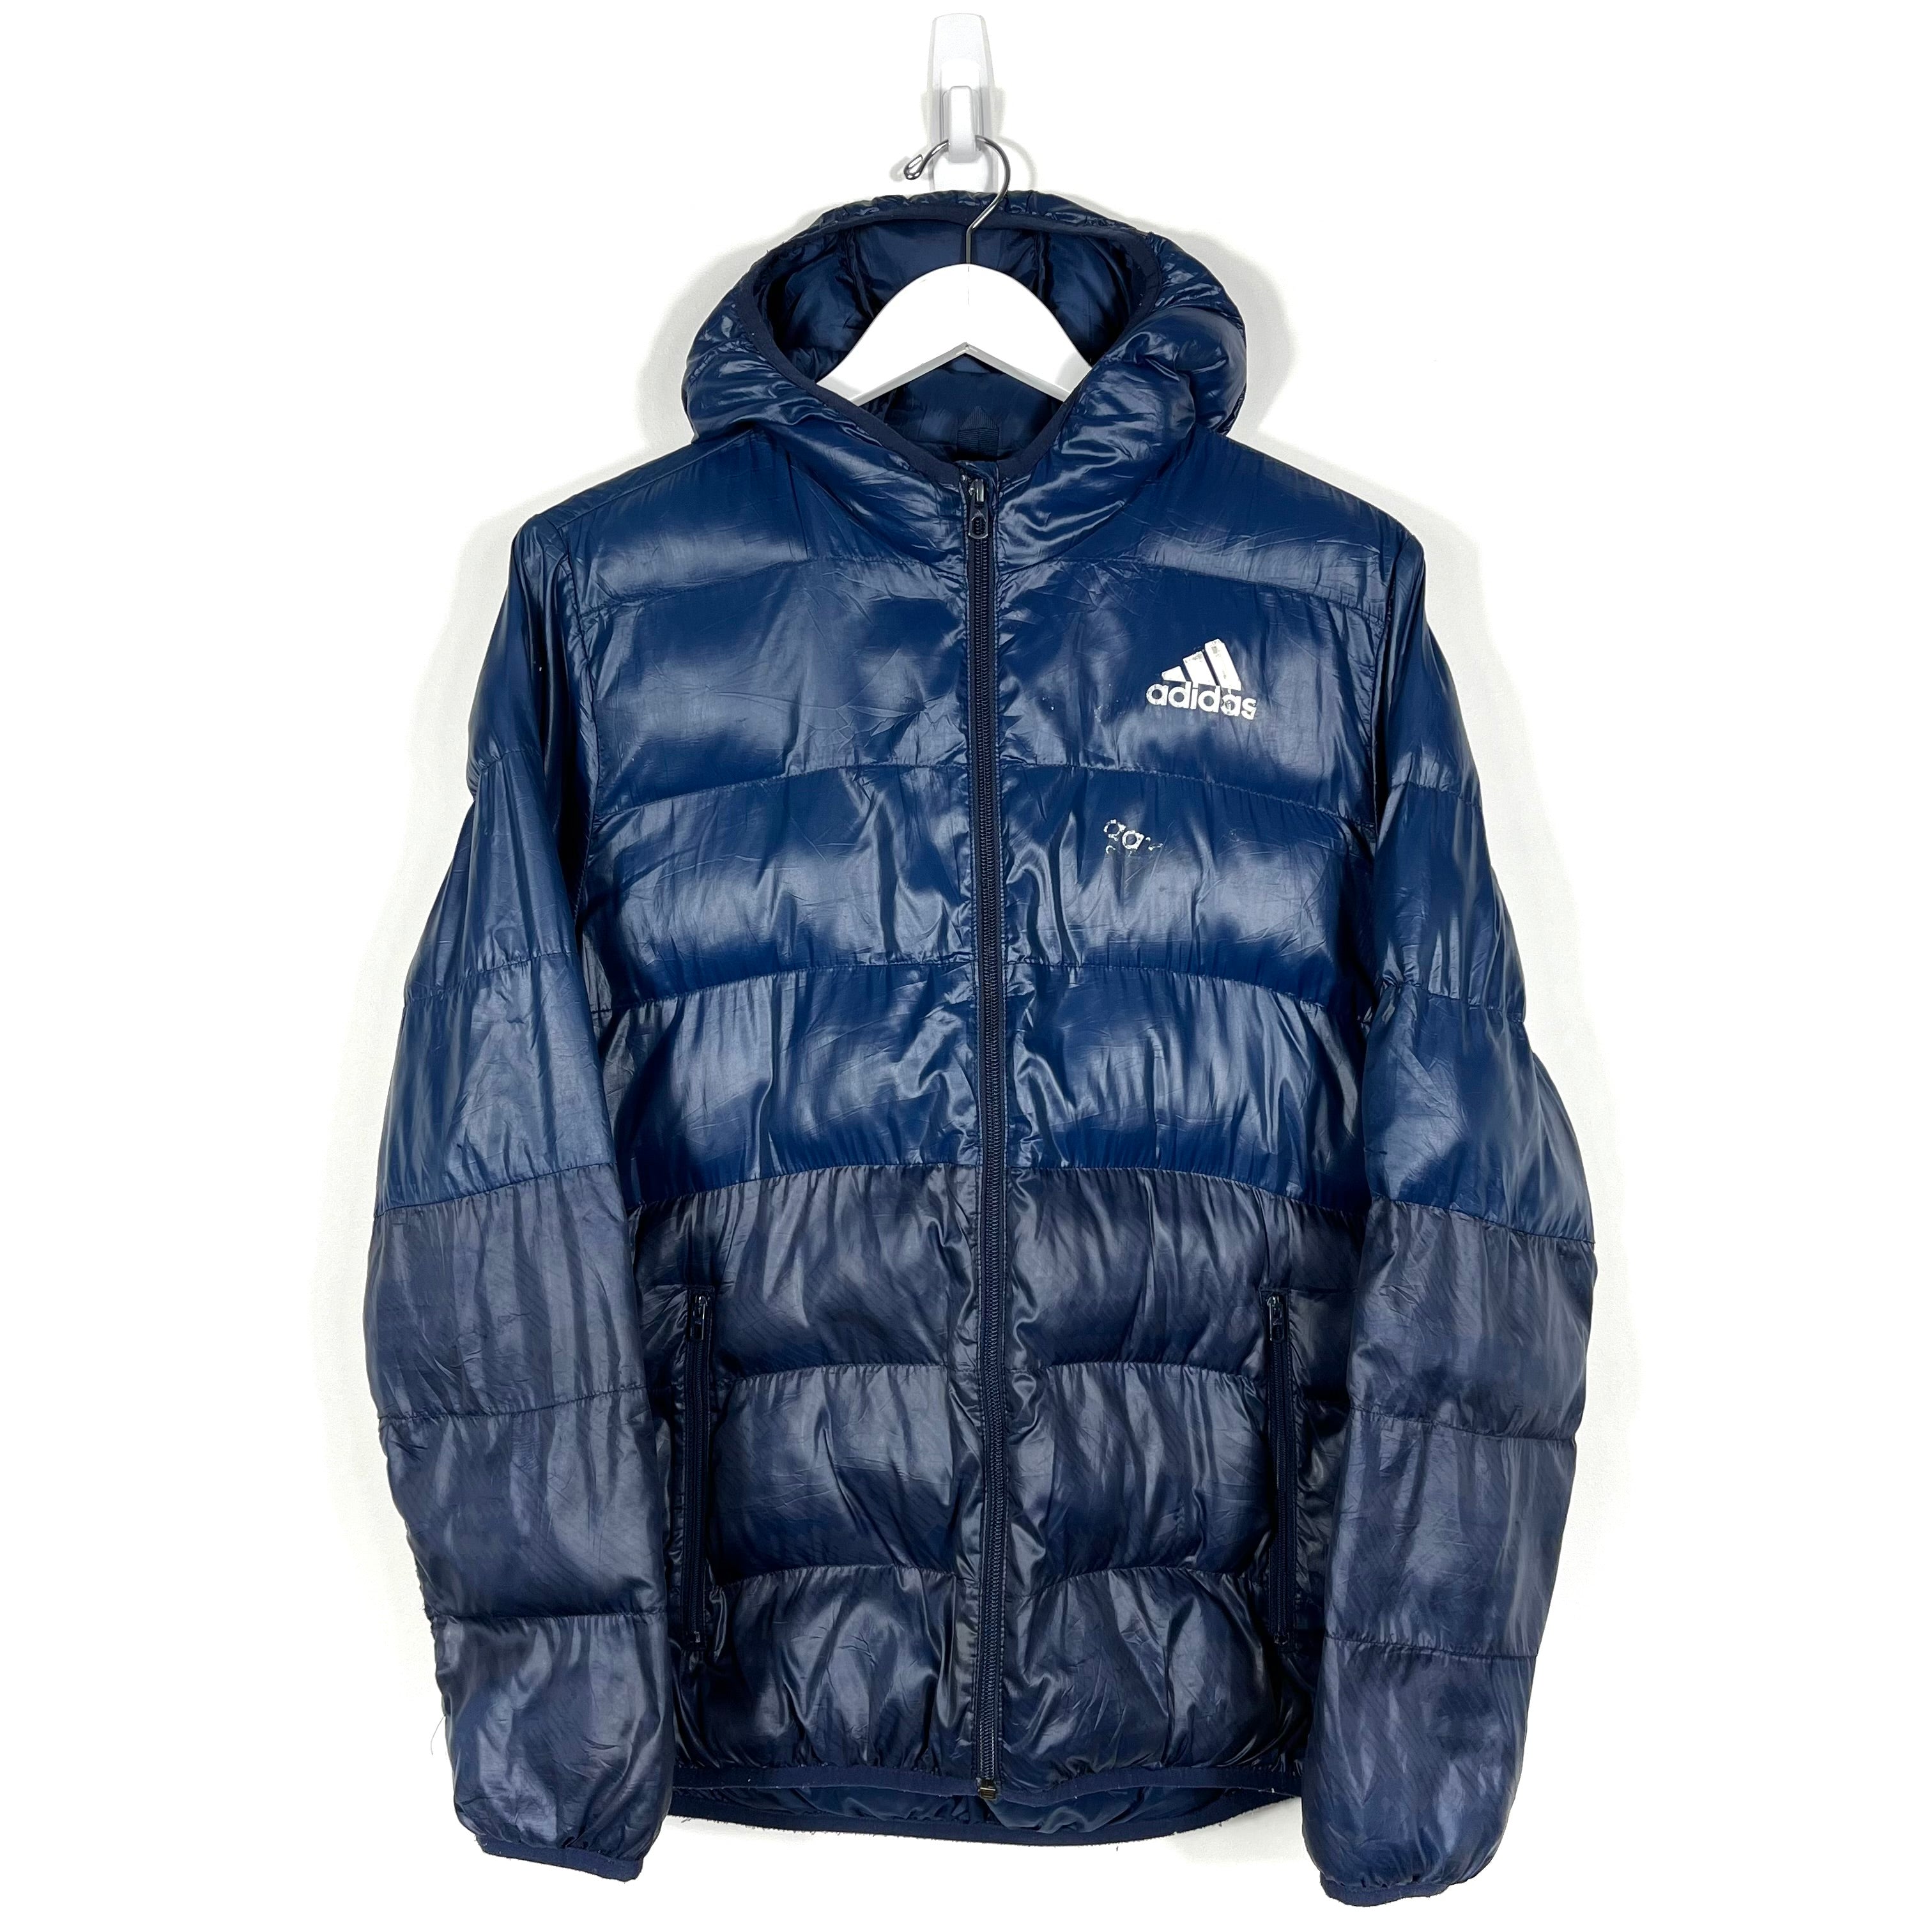 Adidas Puffer Jacket - Men's Small